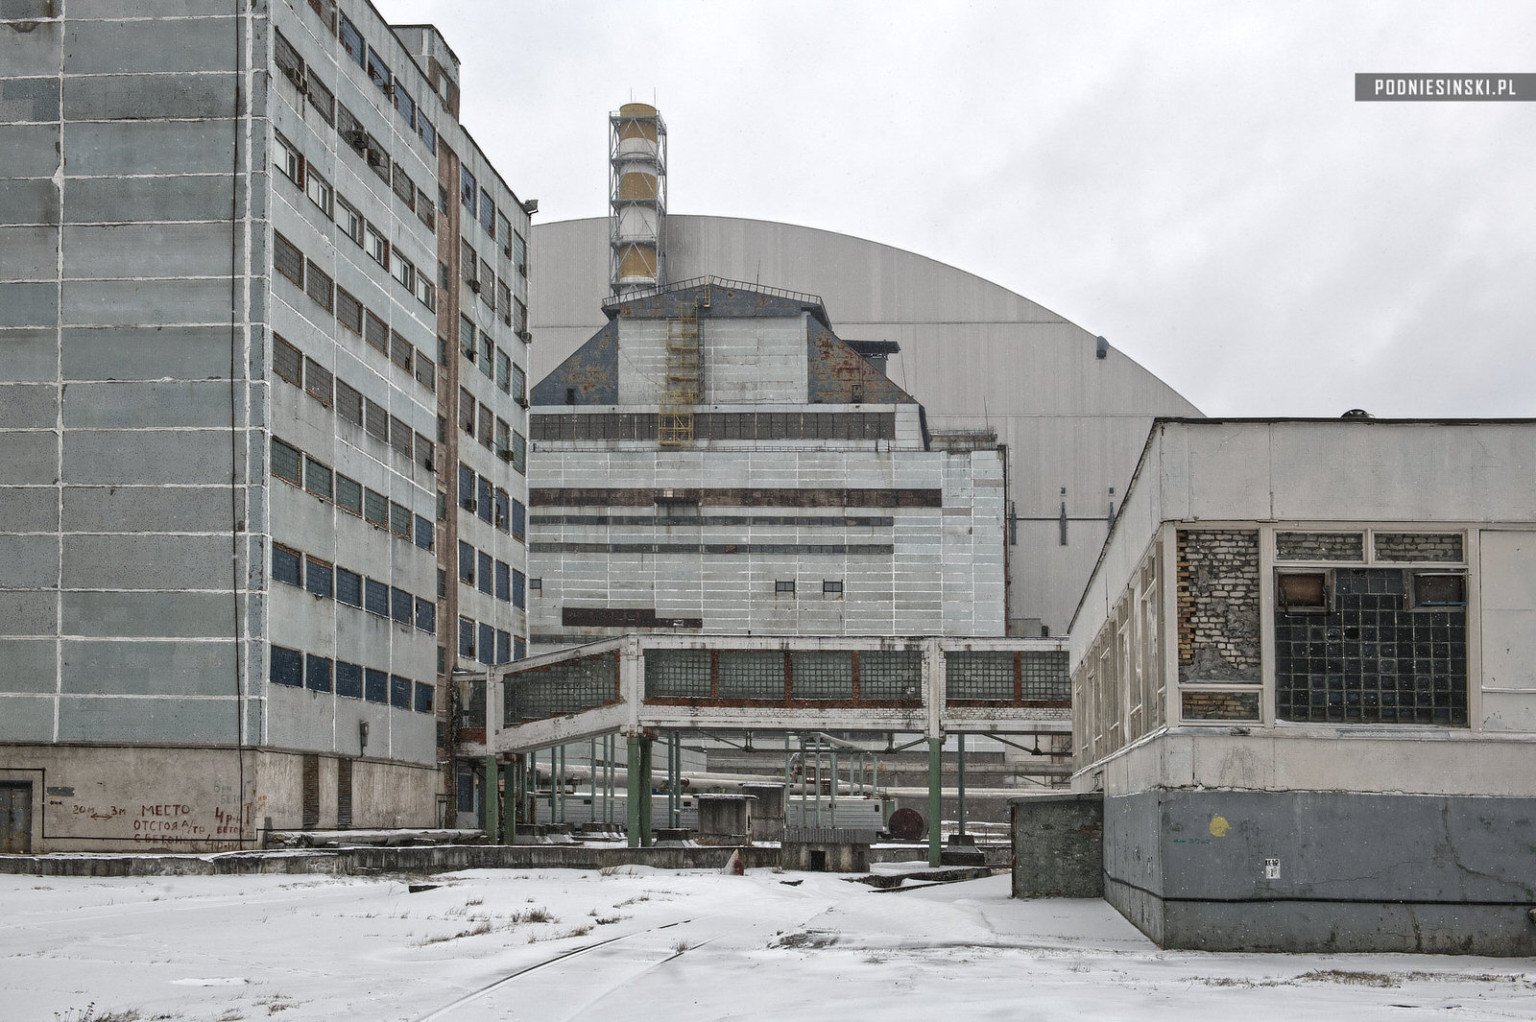 chernobyl nuclear power plant essay